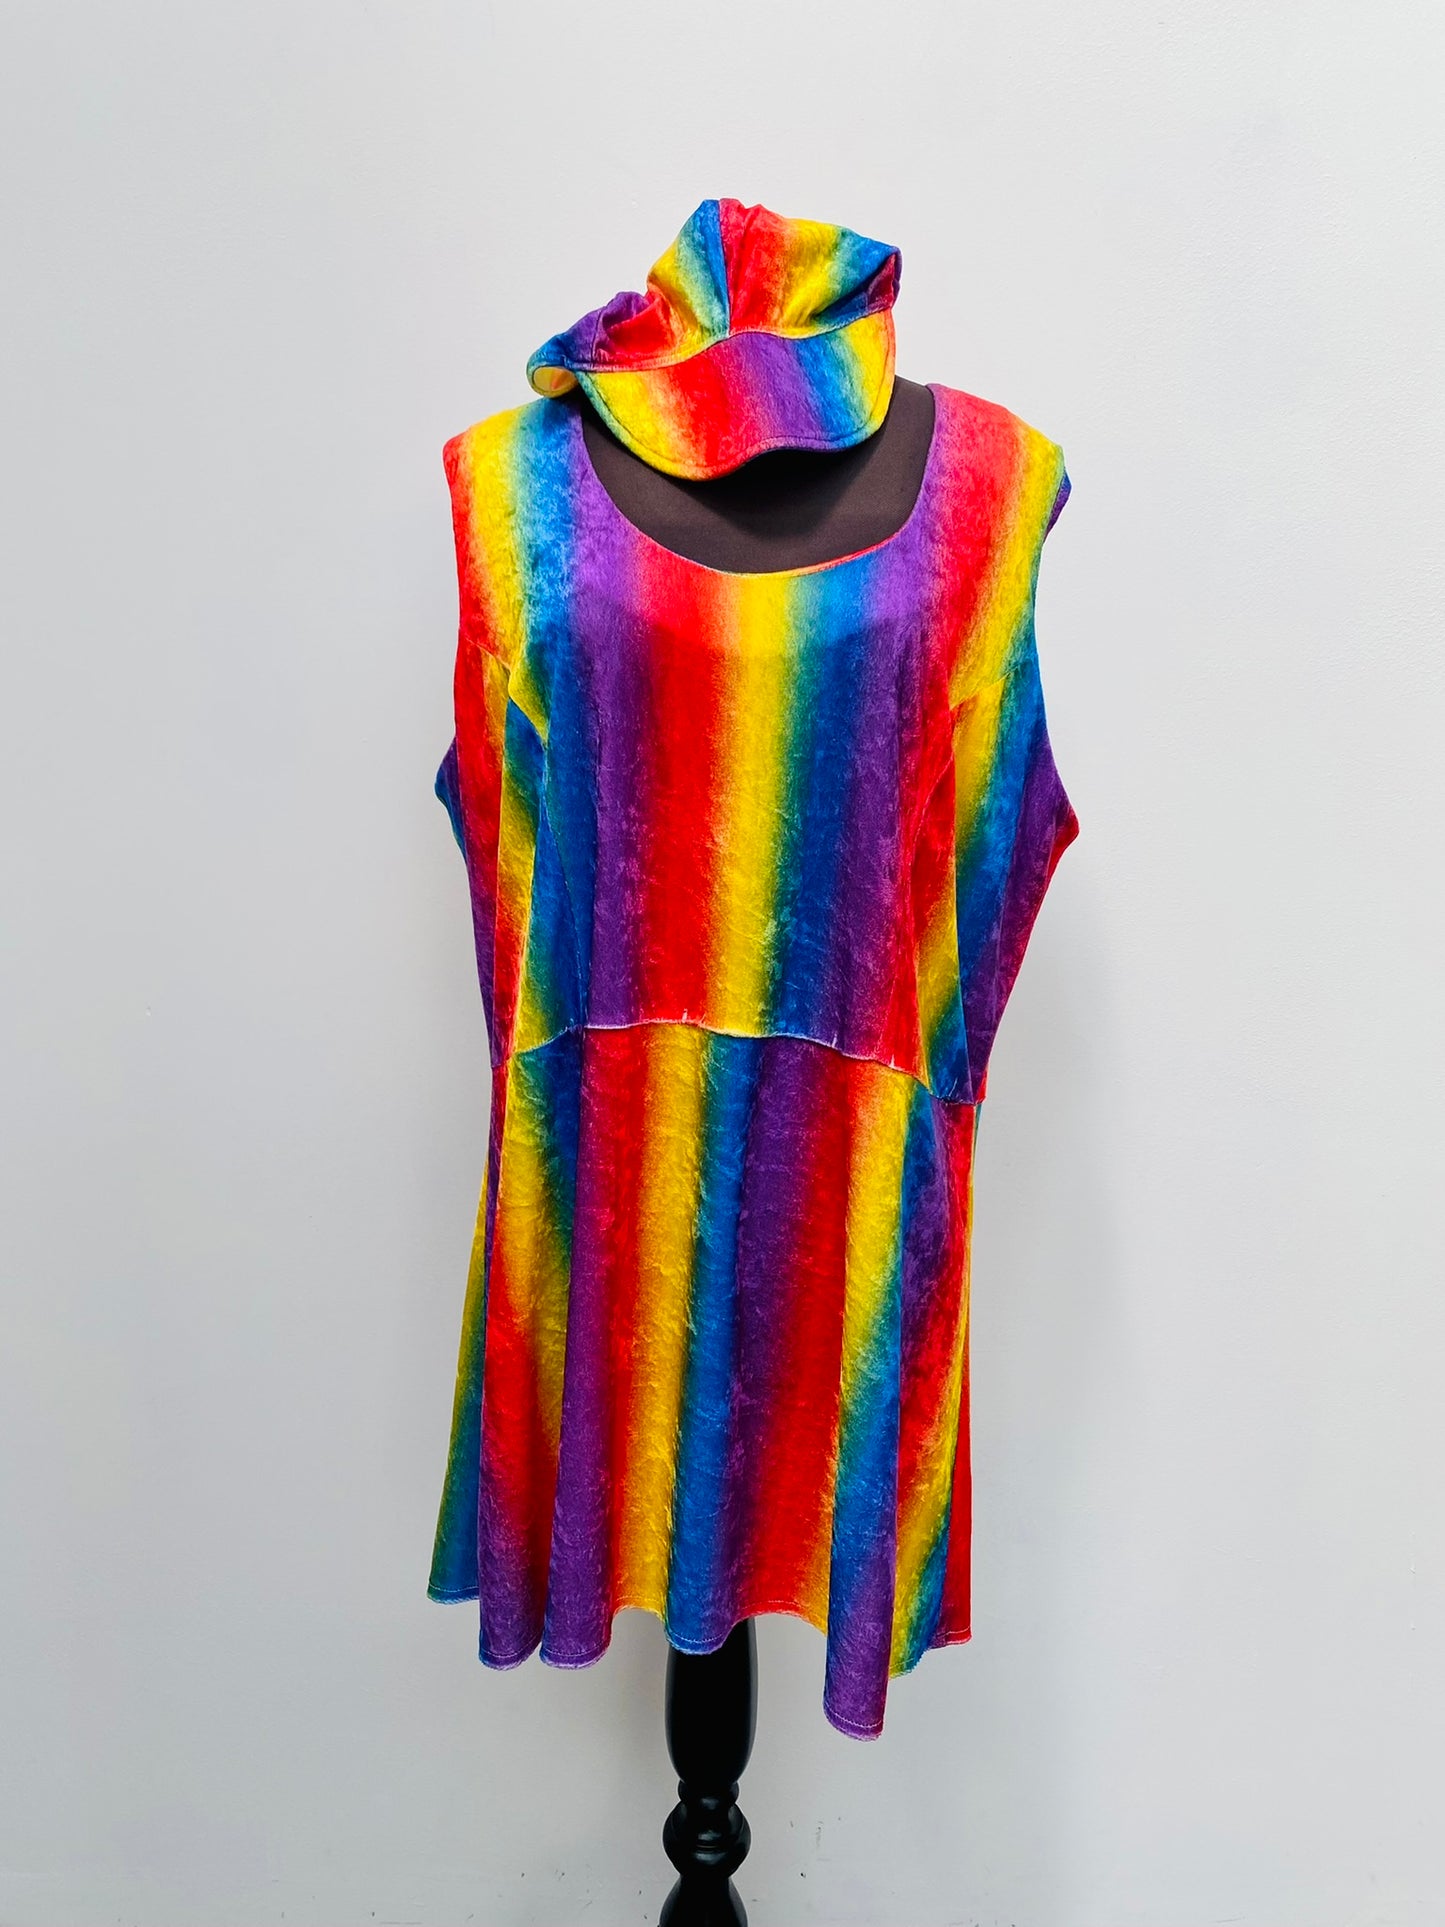 60s-70s style PRIDE Rainbow Mini Dress size EUR48 20/22 - Ex Hire Fancy Dress Costume